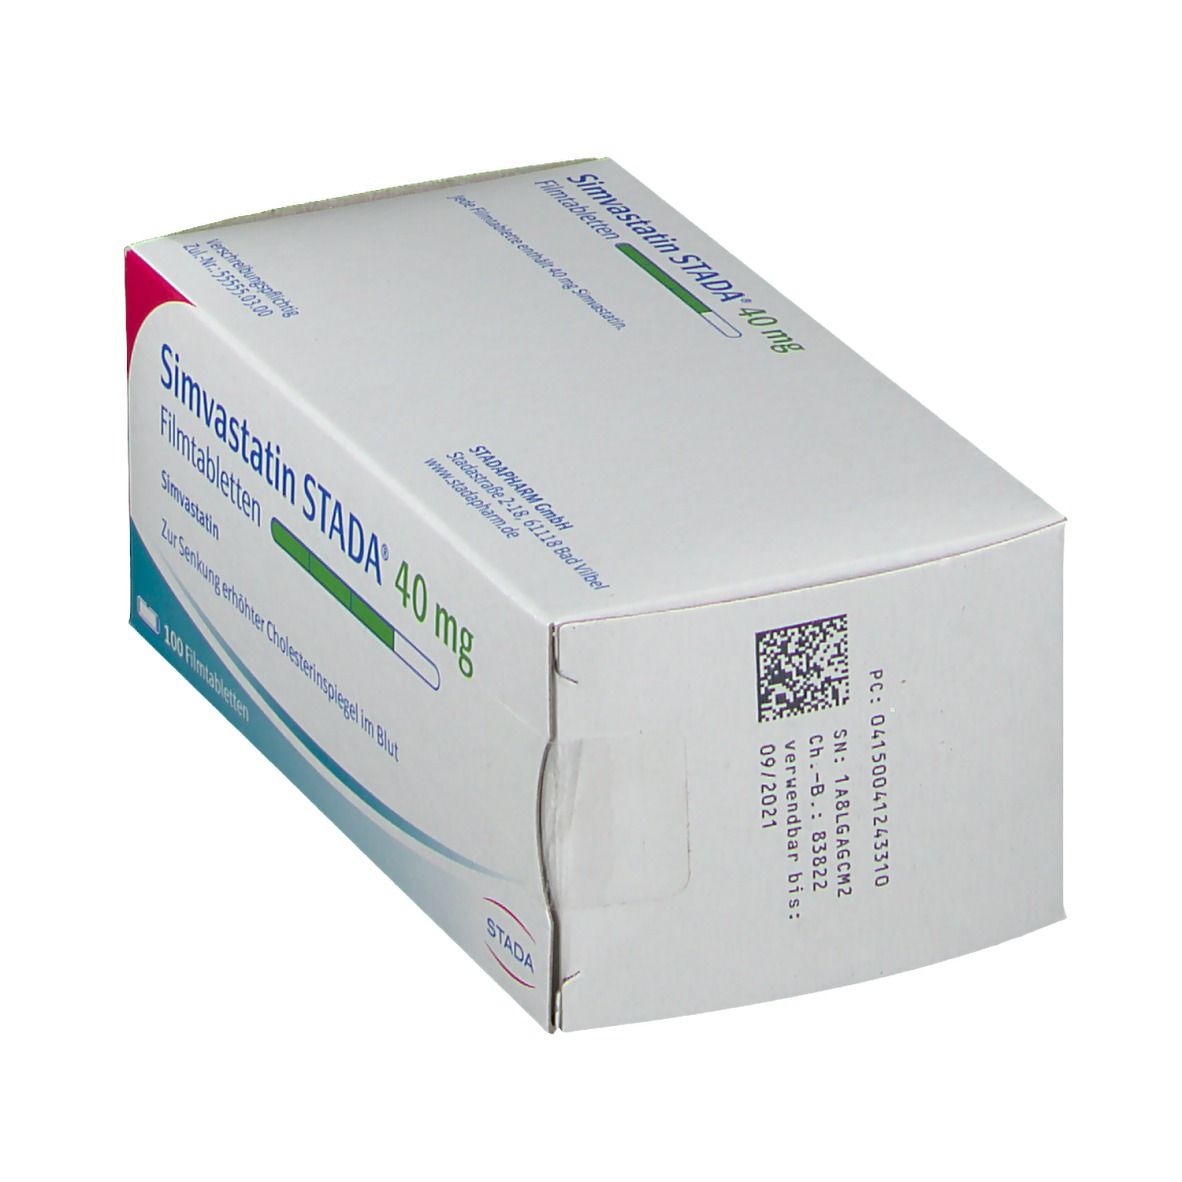 Simvastatin STADA® 40 mg